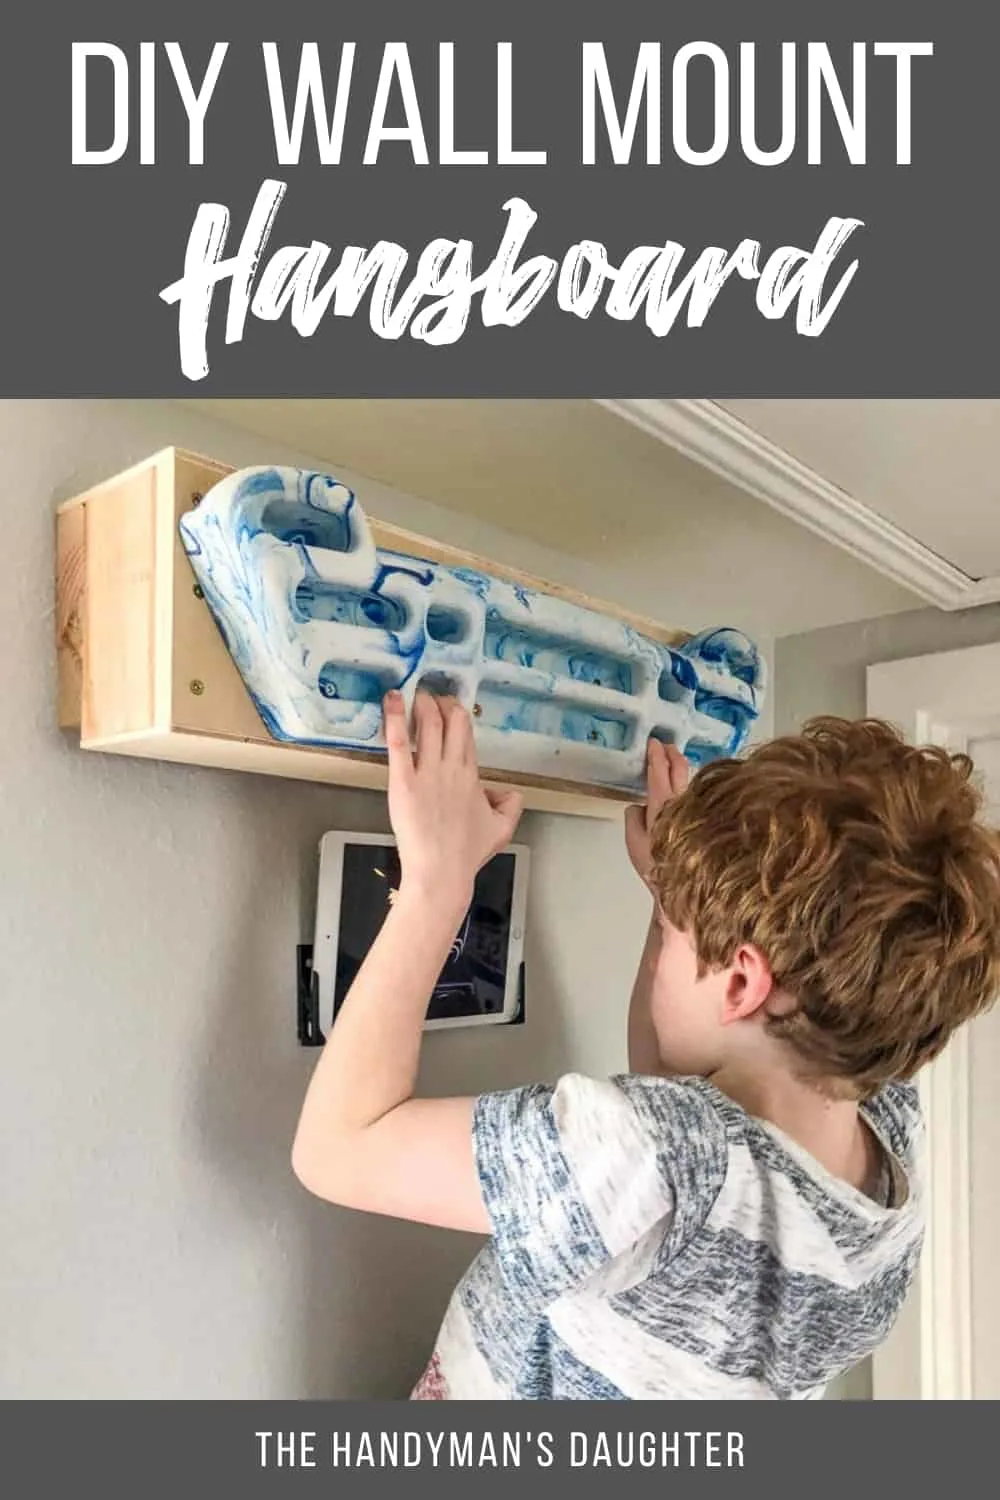 DIY wall mount hangboard by The Handyman's Daughter